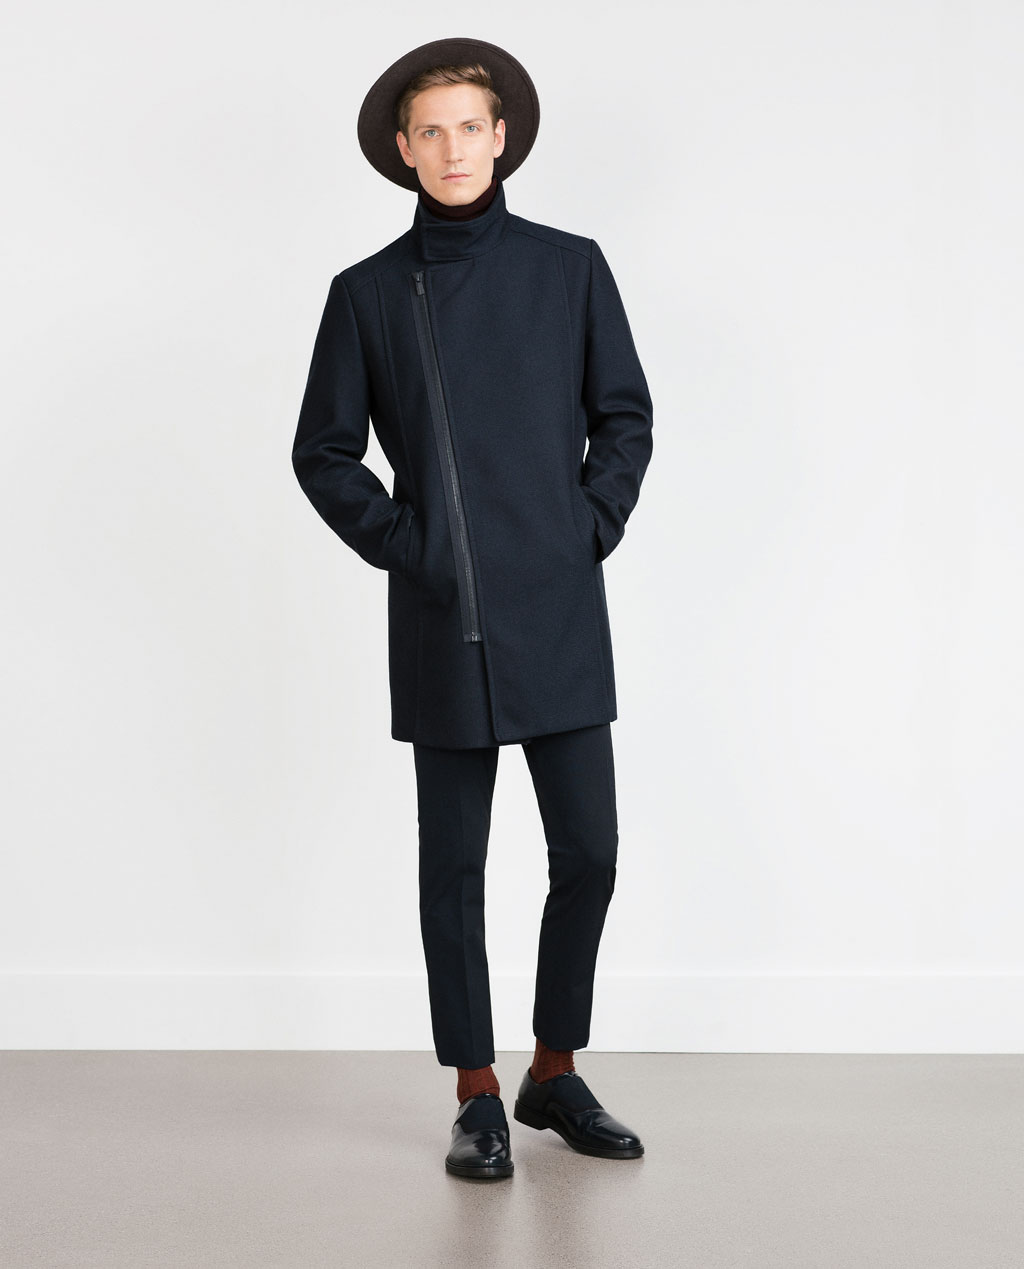 Zara Fall 2015 Menswear Arrivals Style 082